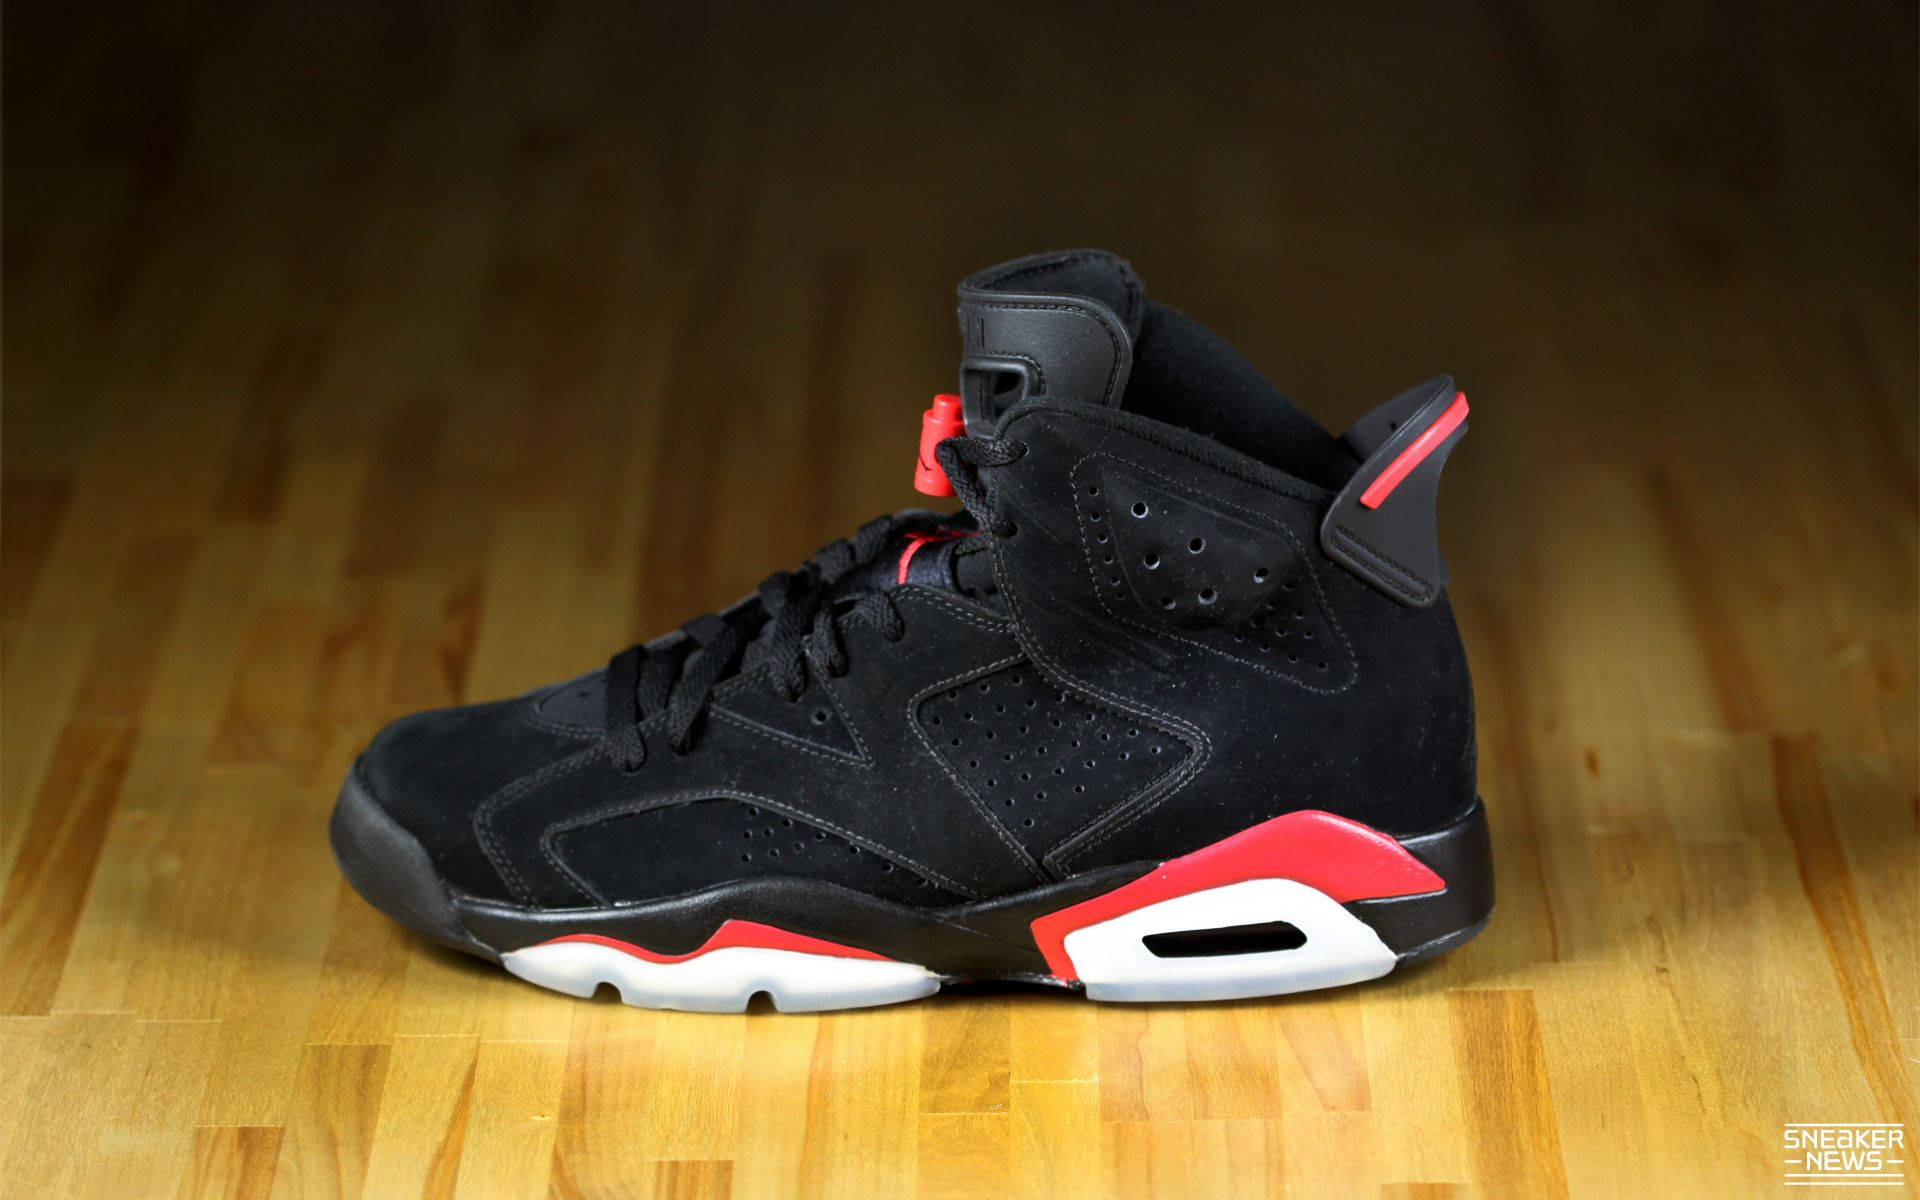 Sneaker Jordan 6 Black And Red Background